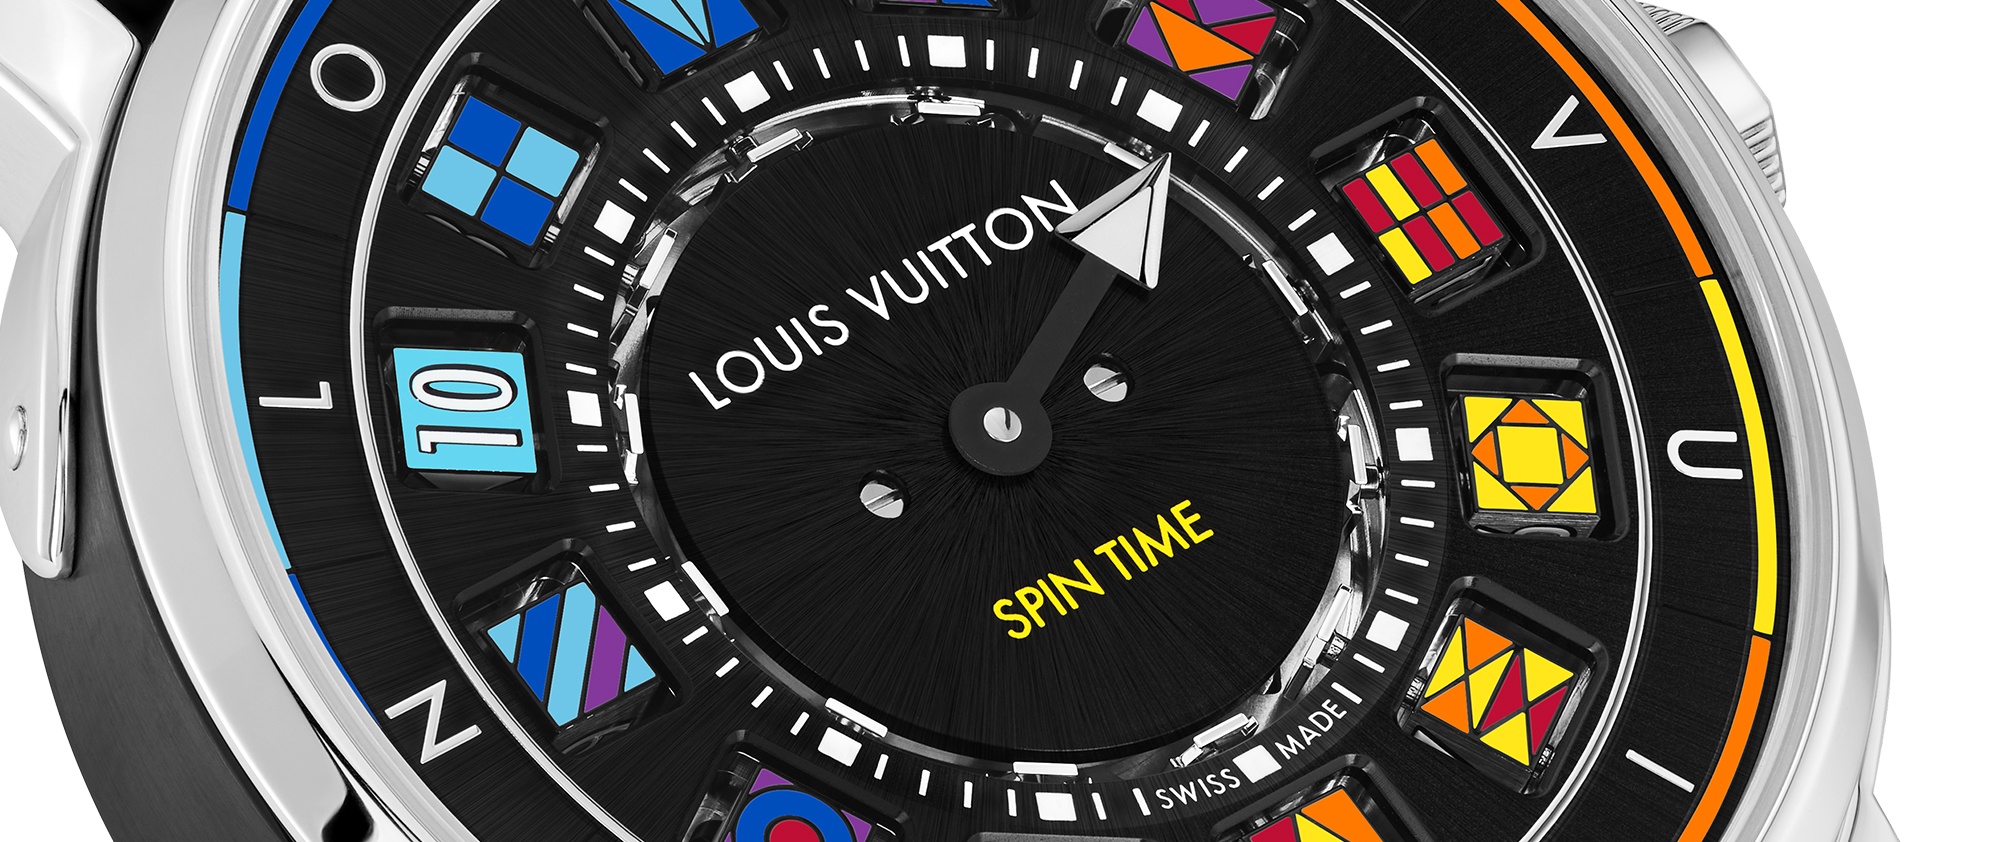 2022 Unworn Louis Vuitton Escale Spin Time Rainbow 41mm Q5DG20 Black Dial  Box Papers